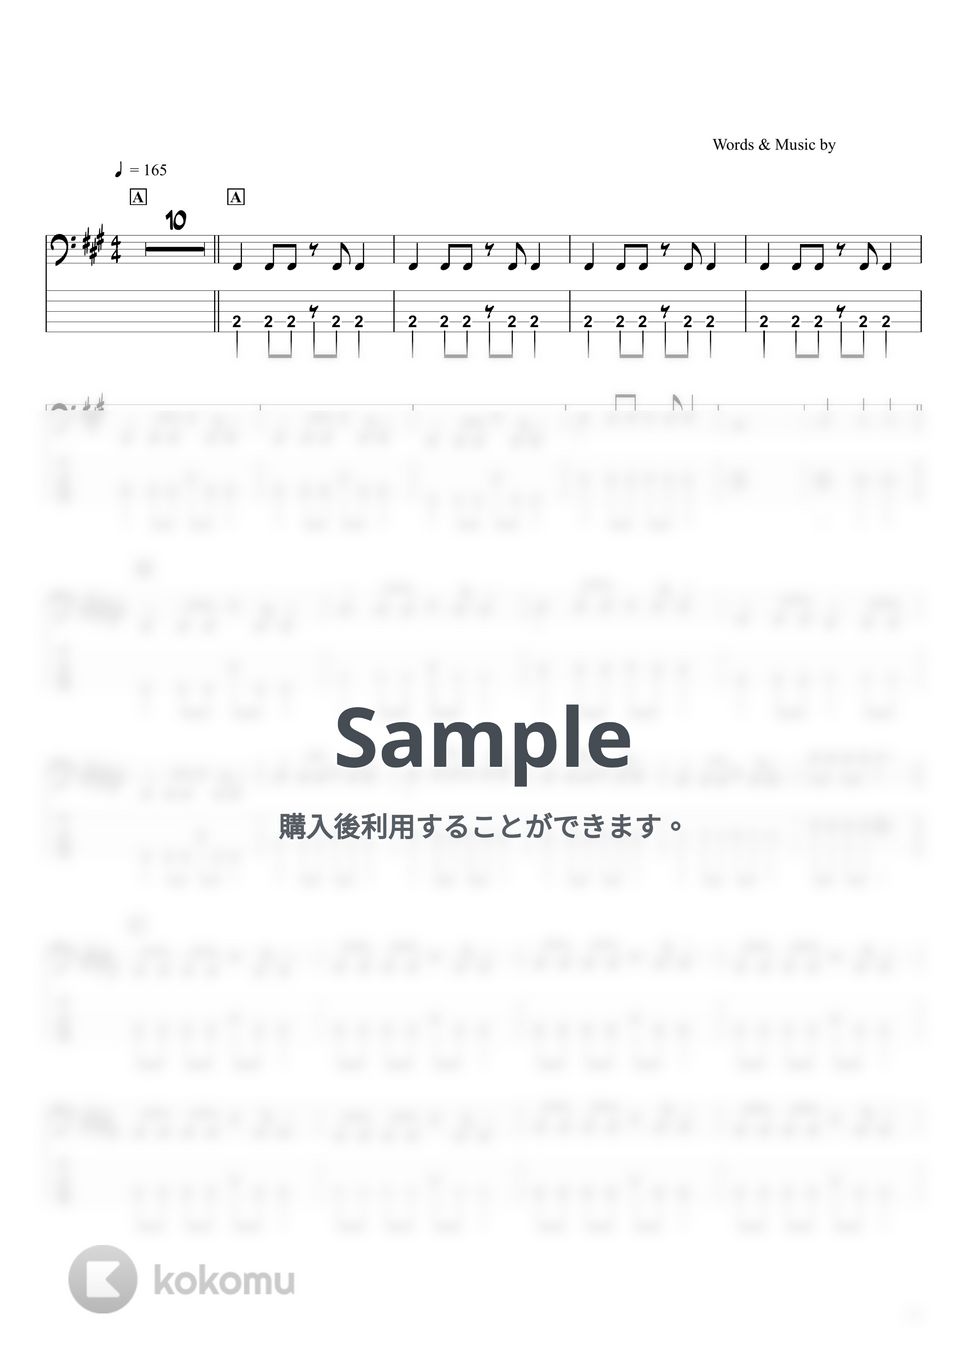 Aimer - 朝が来る (ベースTAB譜☆5弦ベース対応) by swbass